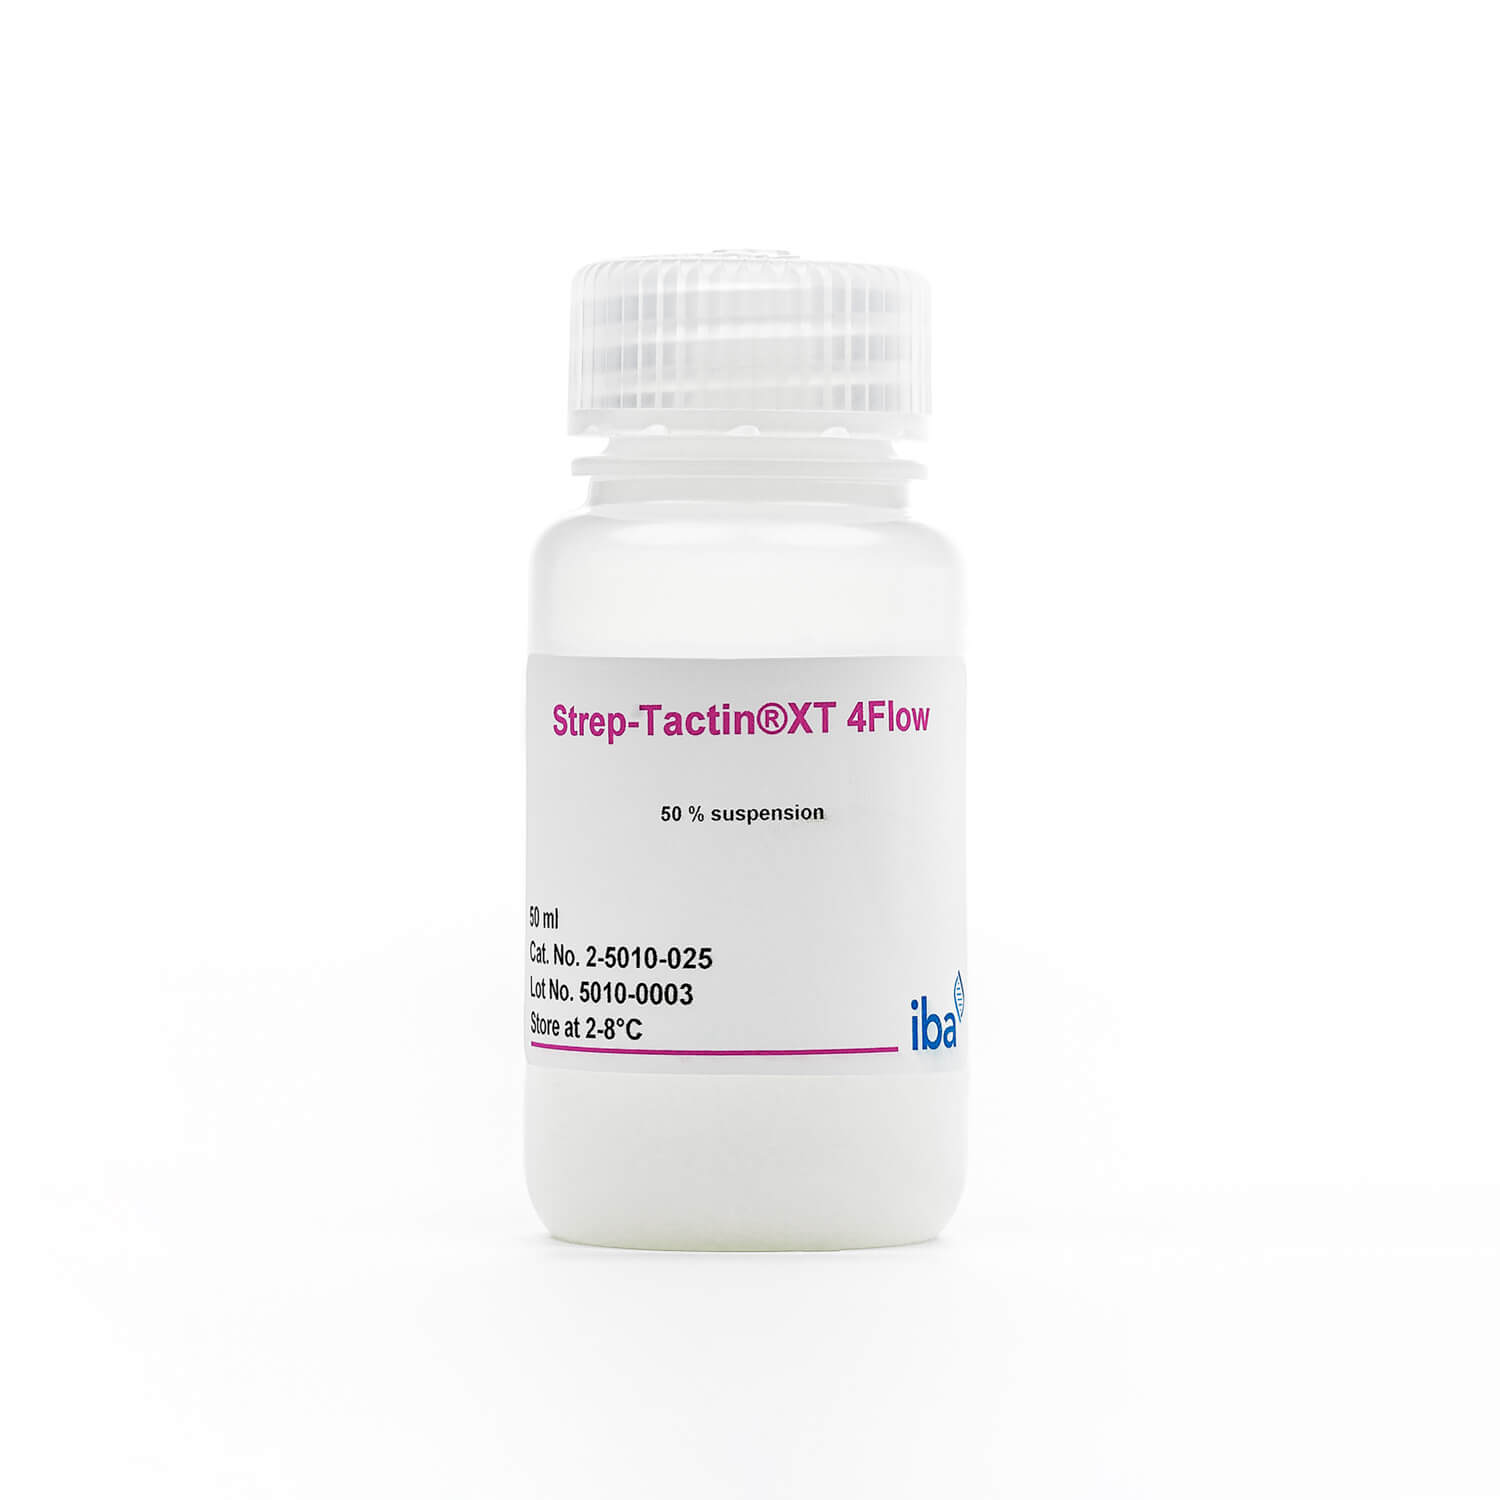 Strep-Tactin®XT 4Flow® resin